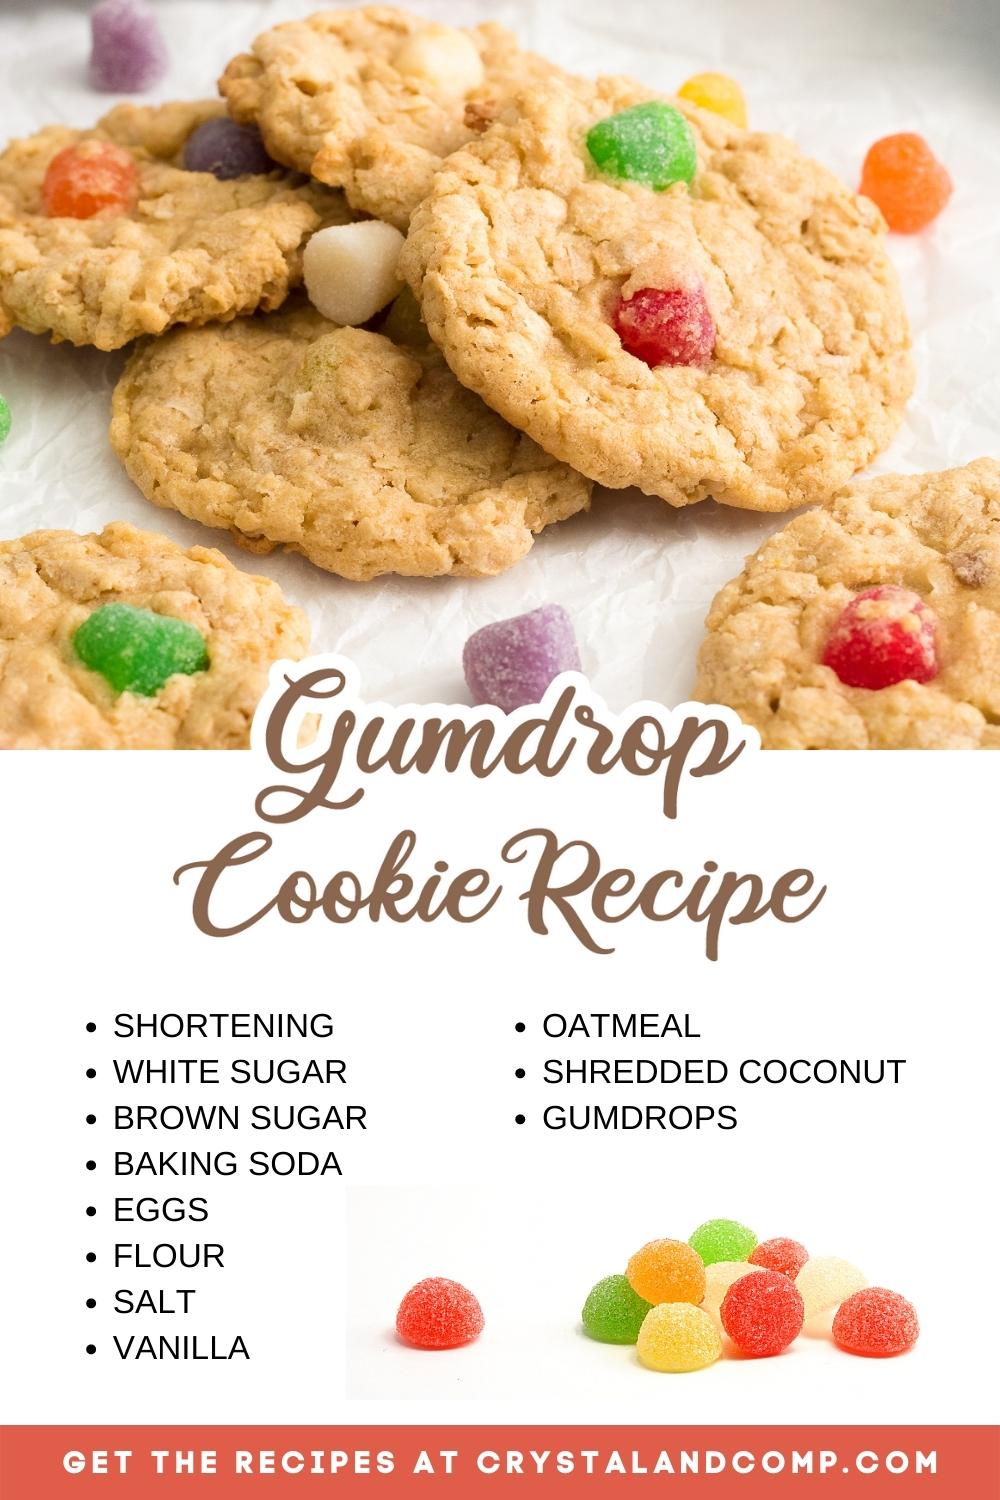 gumdrop cookie recipe  ingredient list